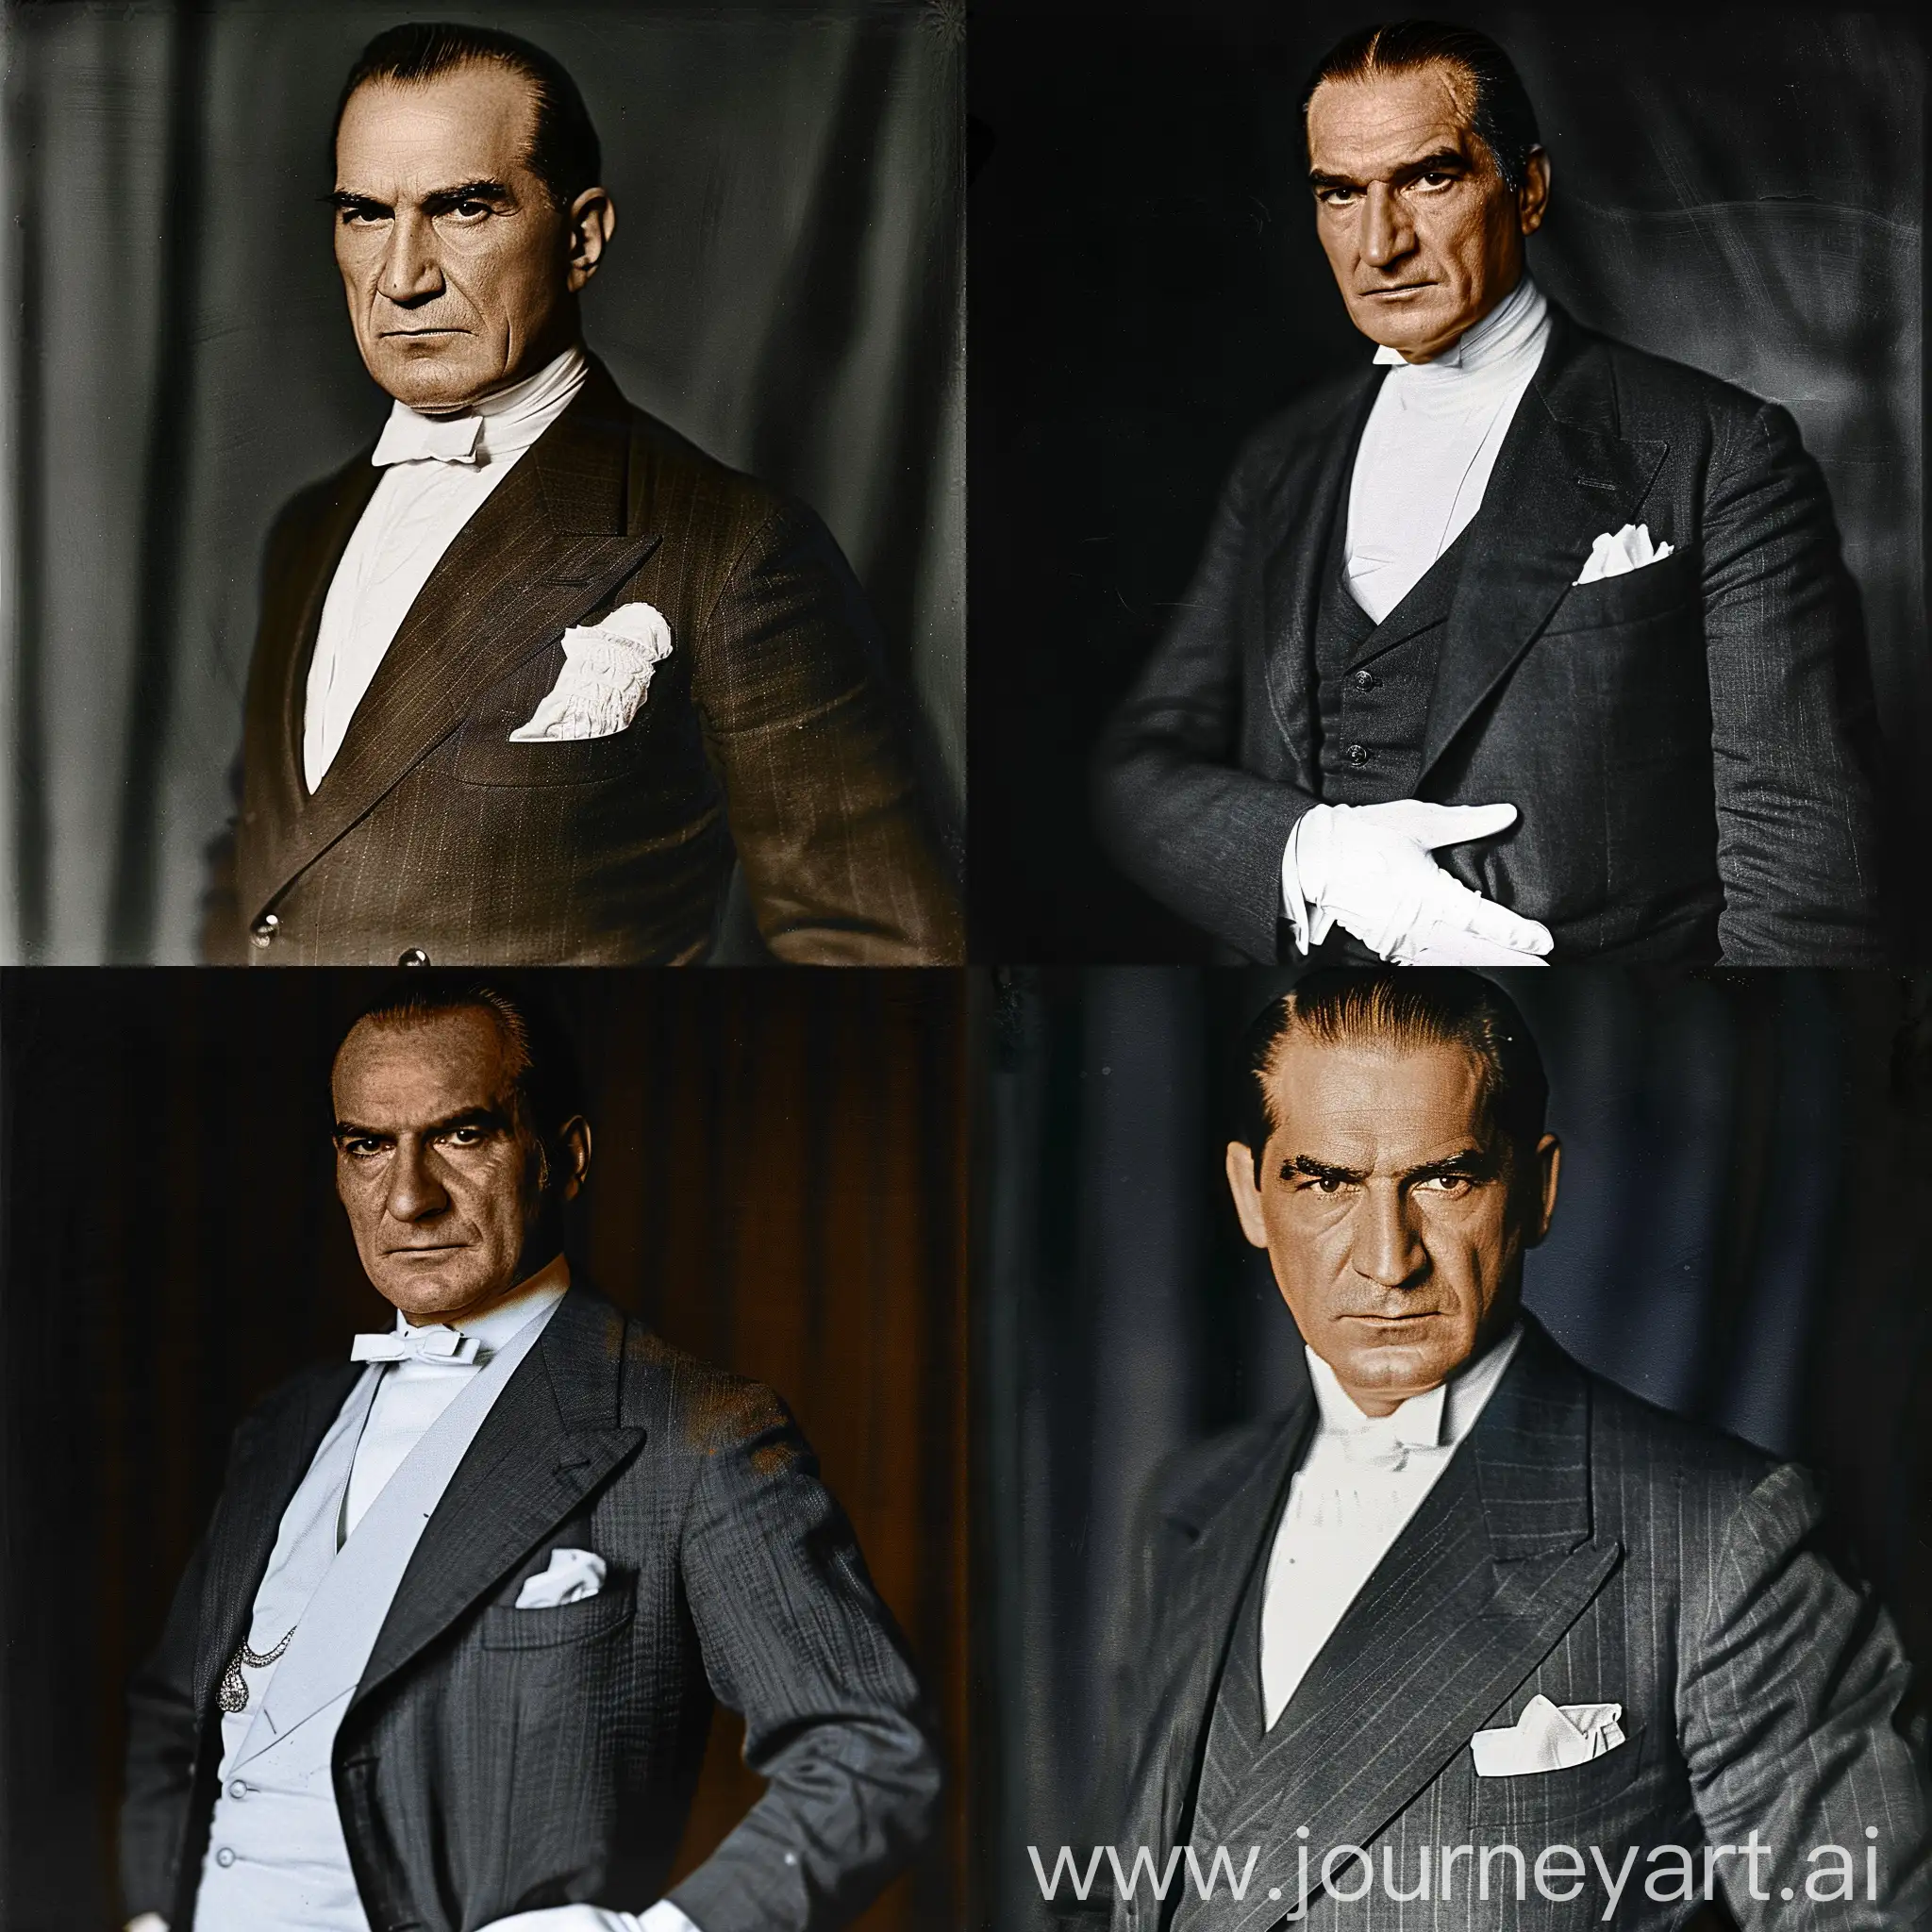 Mustafa-Kemal-Atatrk-Charismatic-Leader-in-Elegant-Attire-Colorized-Portrait